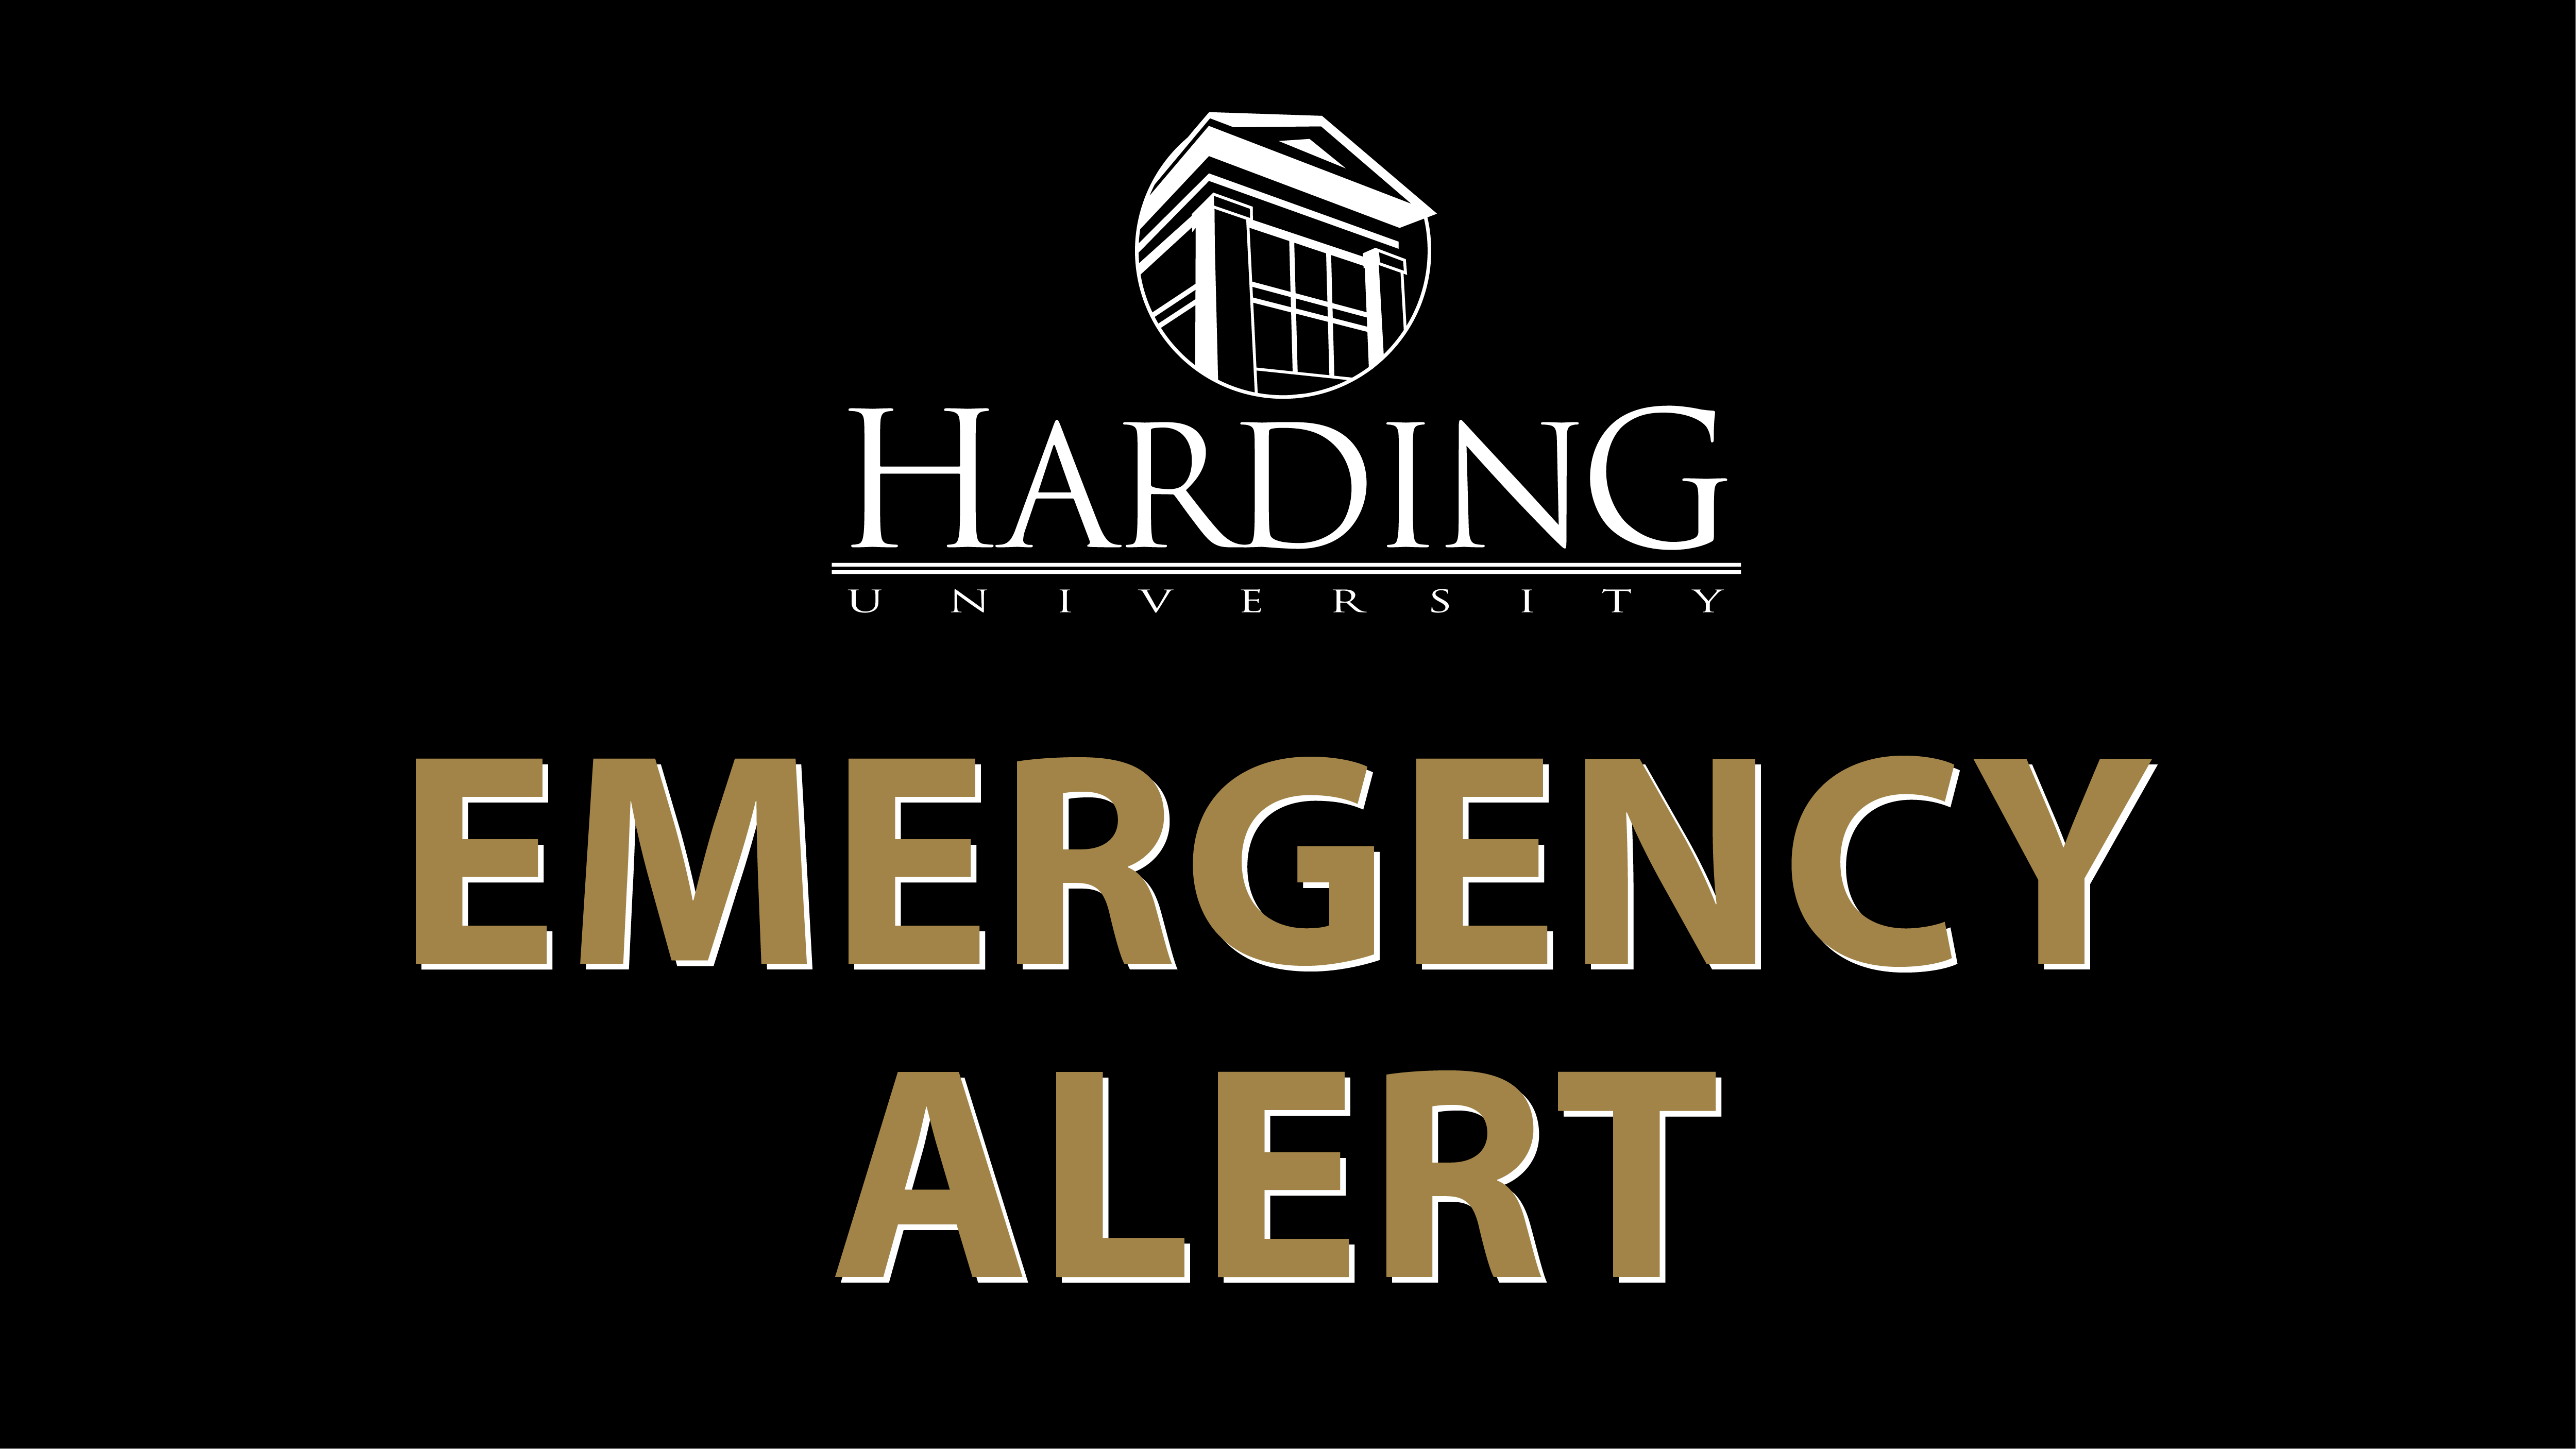 Harding-Emergency-Alert-1200x675-01.png